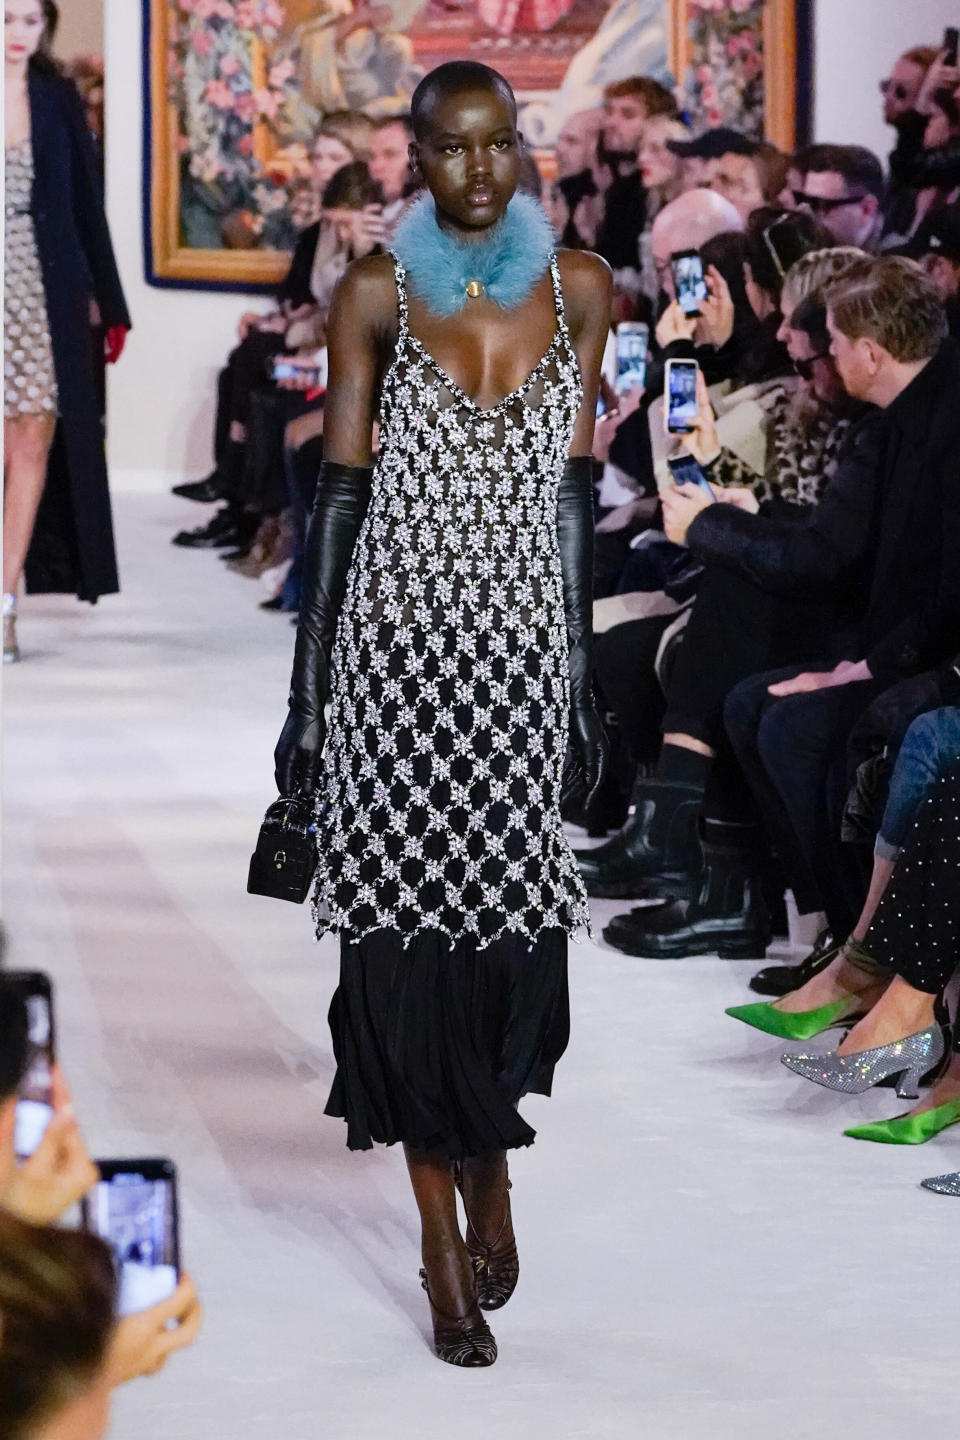 Adut Akech walks the runway at the Lanvin fall/winter 2020/2021 show during Paris Fashion Week on Feb. 26.